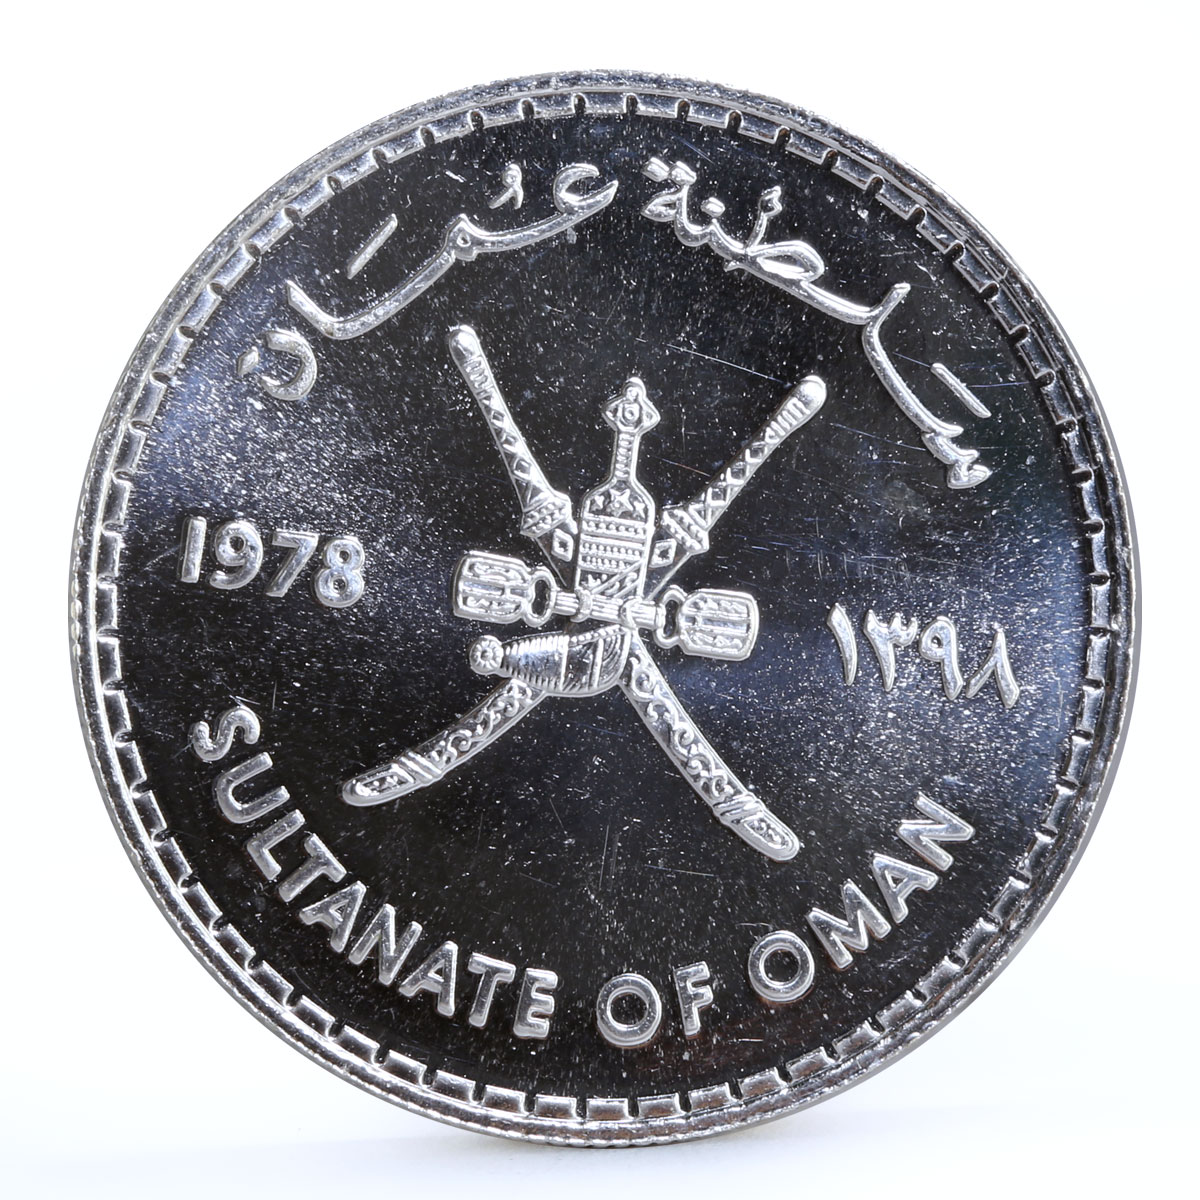 Oman 1 rial FAO Conference Fish silver coin 1978